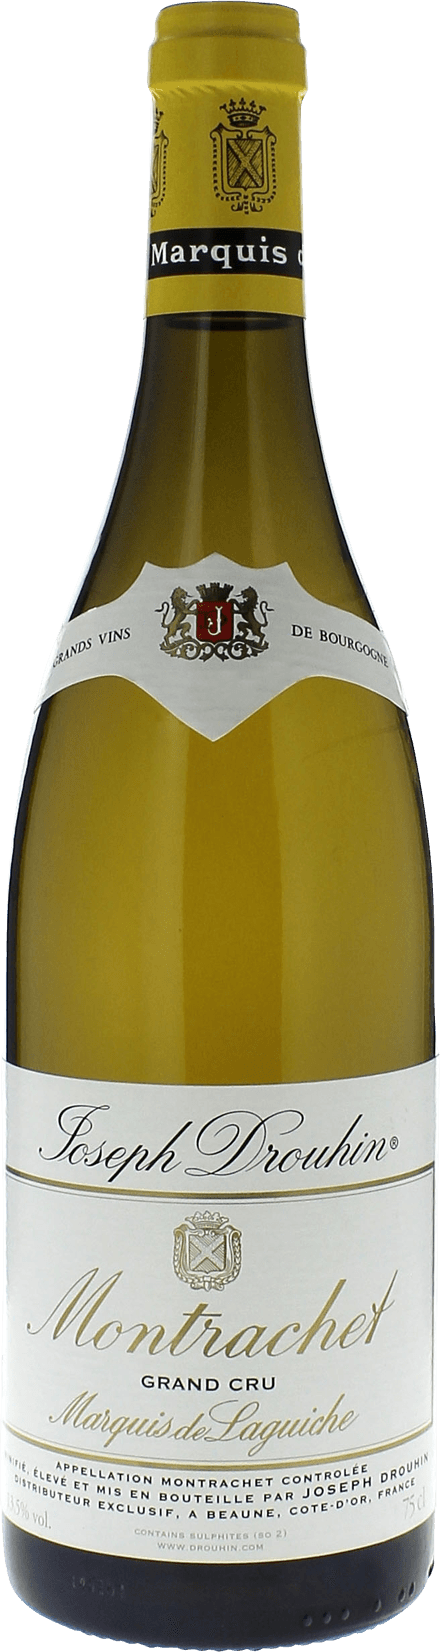 Montrachet grand cru marquis de laguiche 2018 Domaine Joseph DROUHIN, Bourgogne blanc